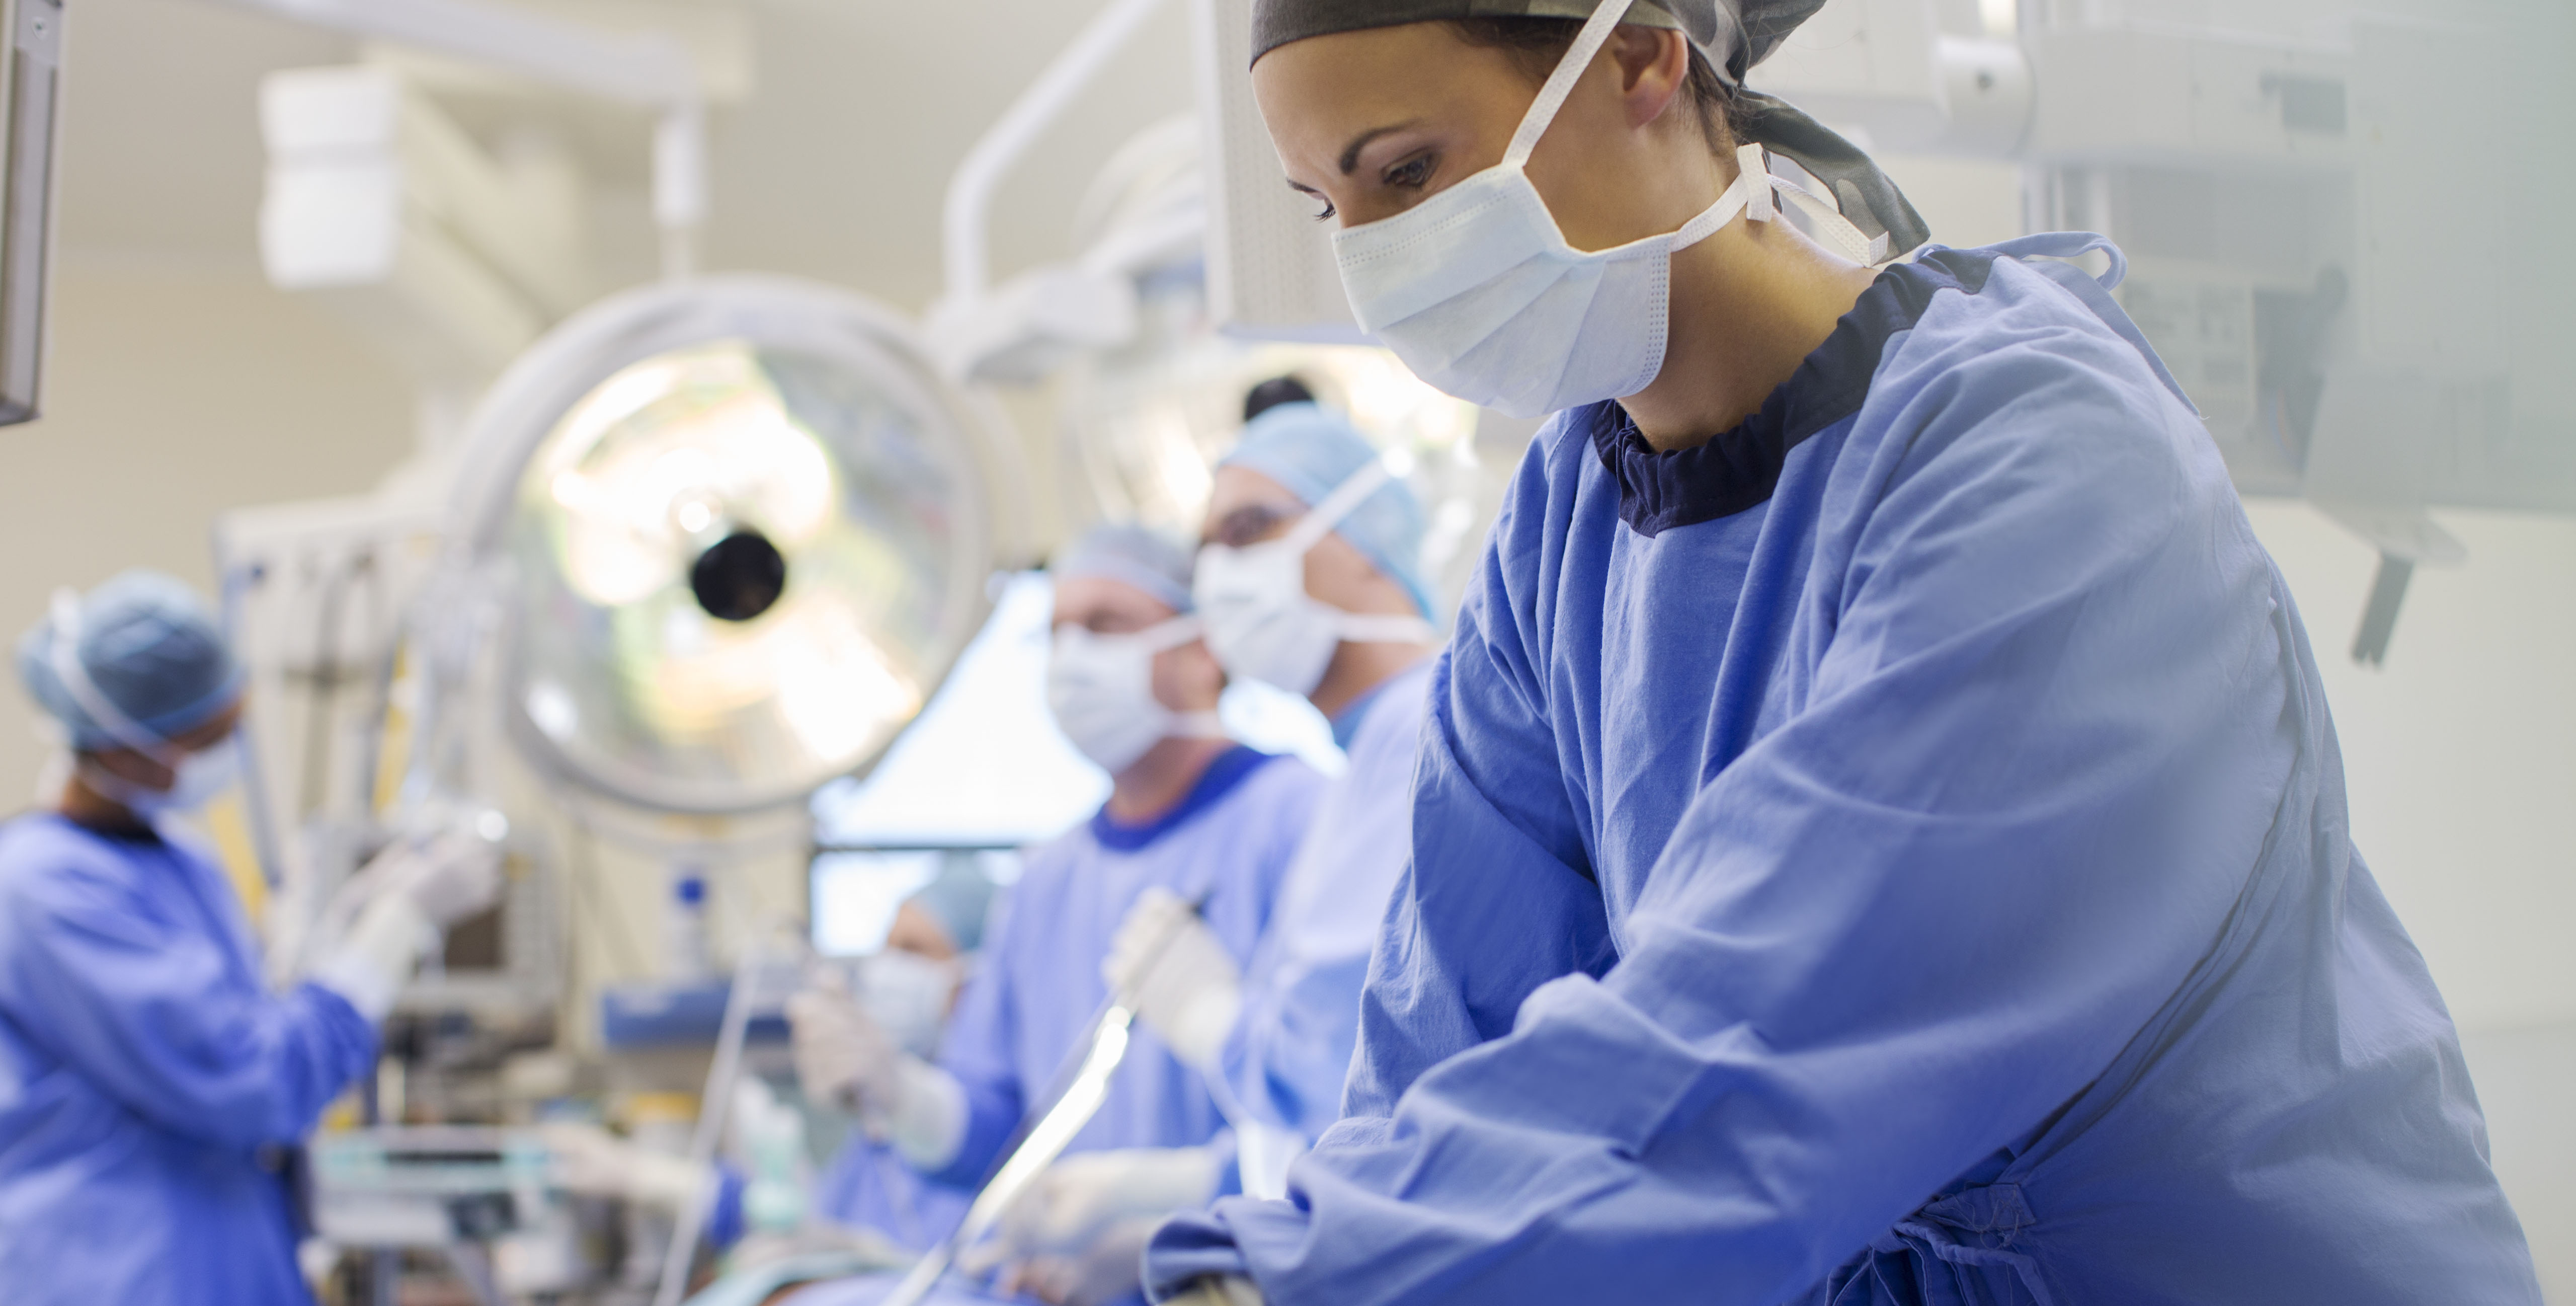 Nurse wearing scrubs preparing medical instruments in operating theater